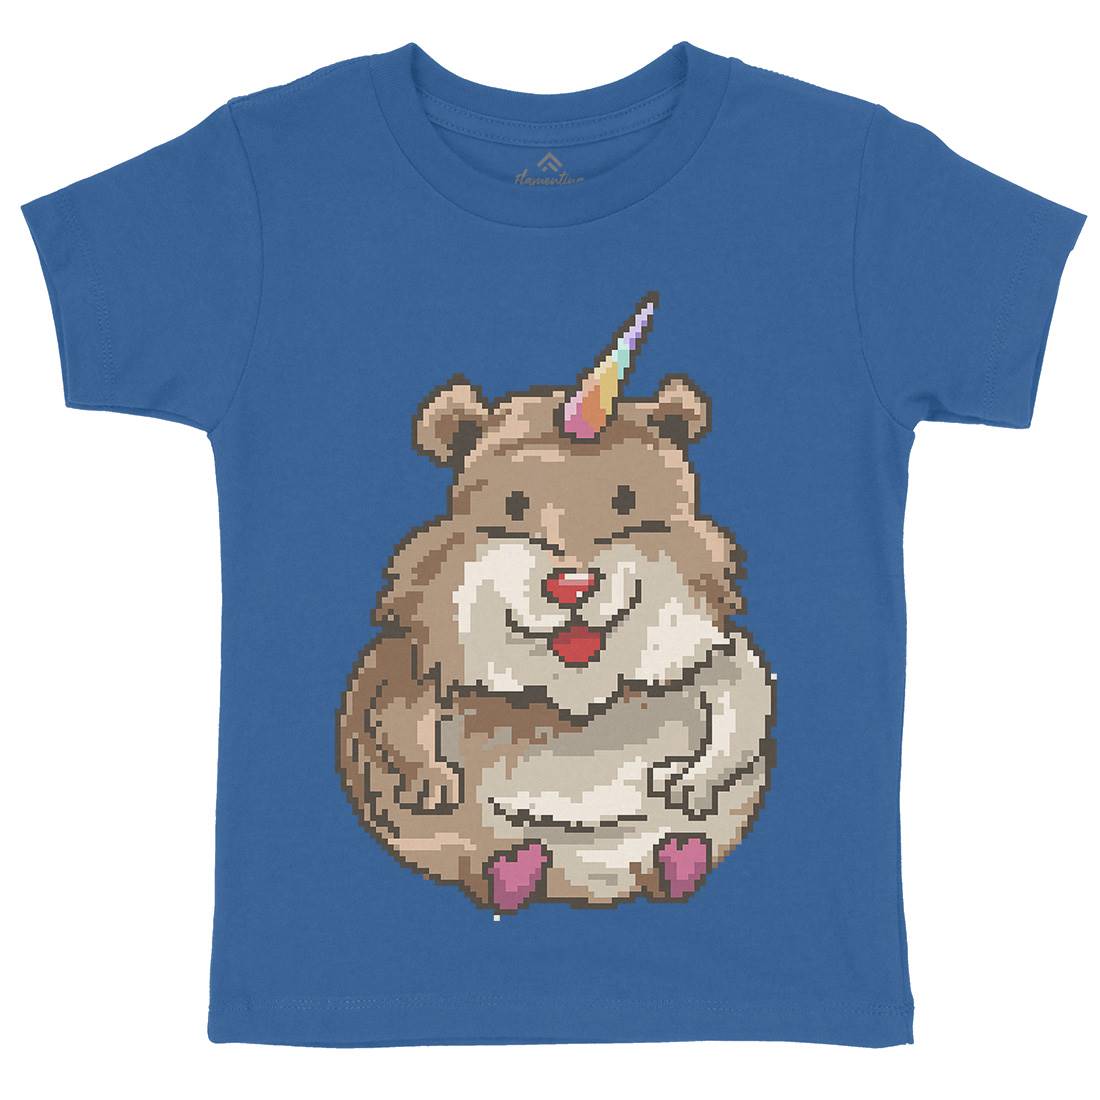 Hamster Unicorn Kids Organic Crew Neck T-Shirt Animals B908